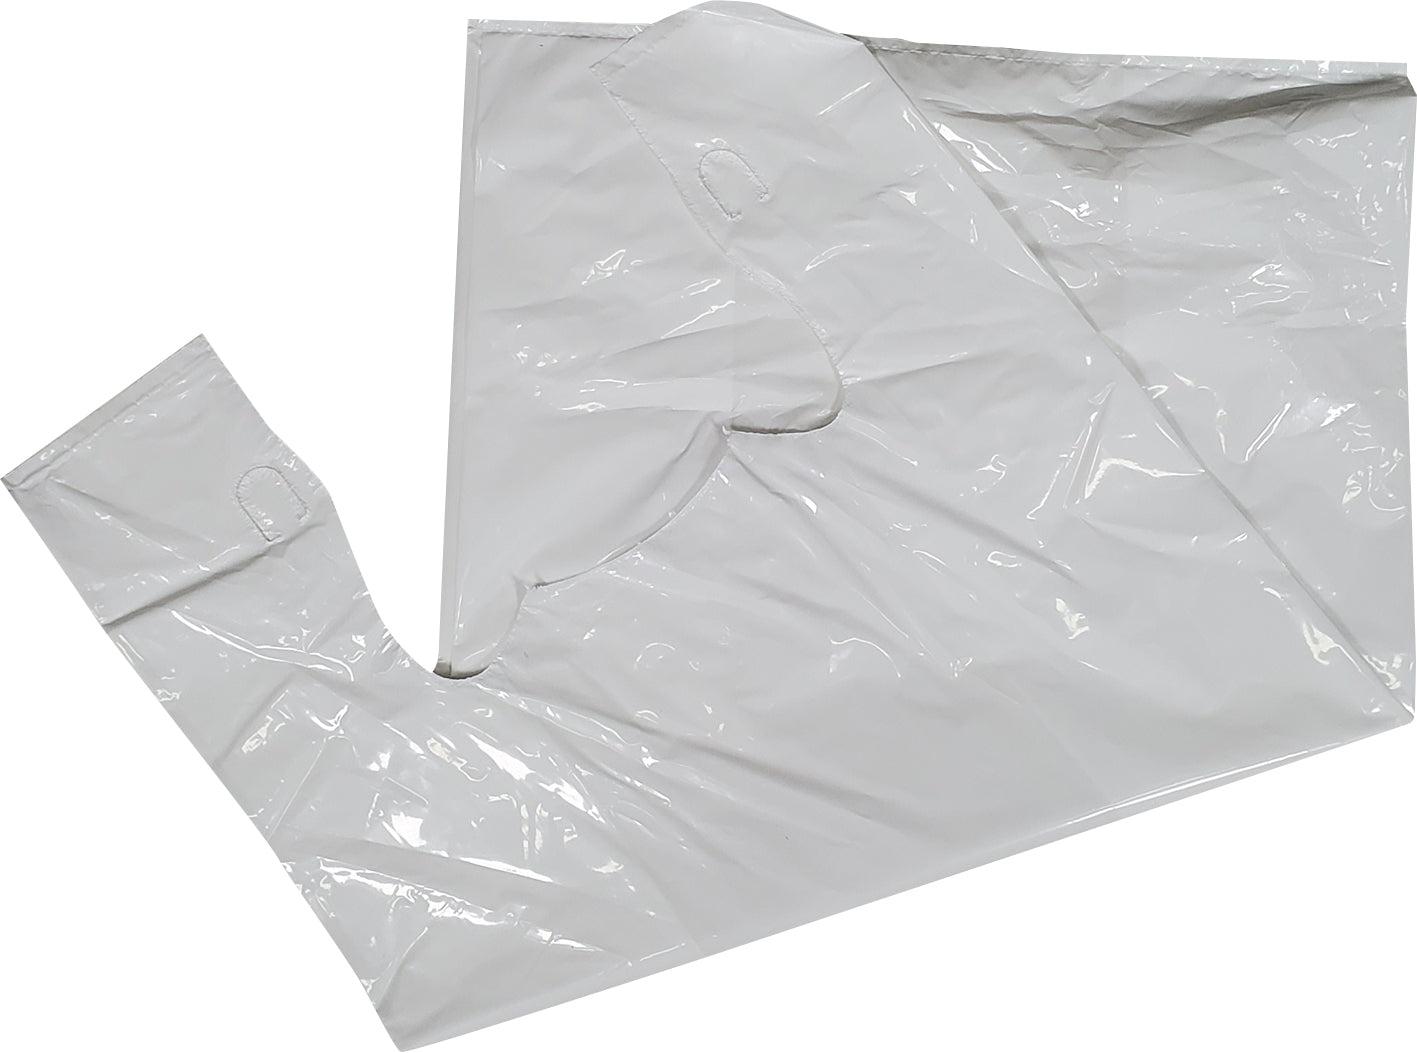 PVC Bags - Clear PVC Bag Manufacturer from Mumbai